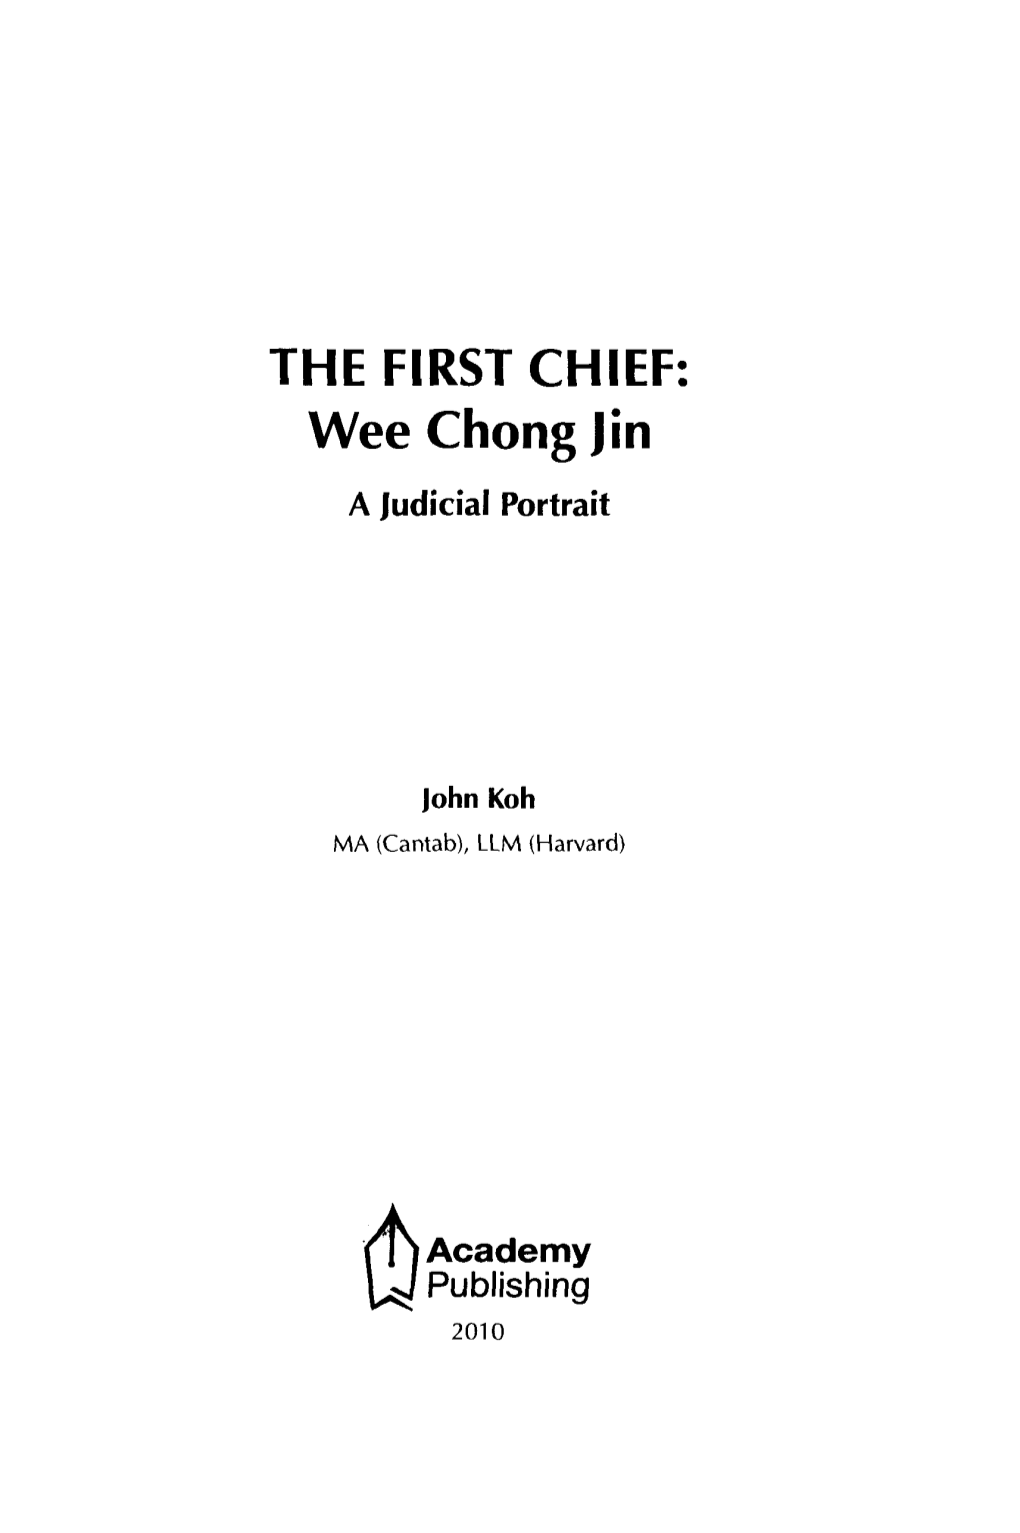 Wee Chong Jin a Judicial Portrait